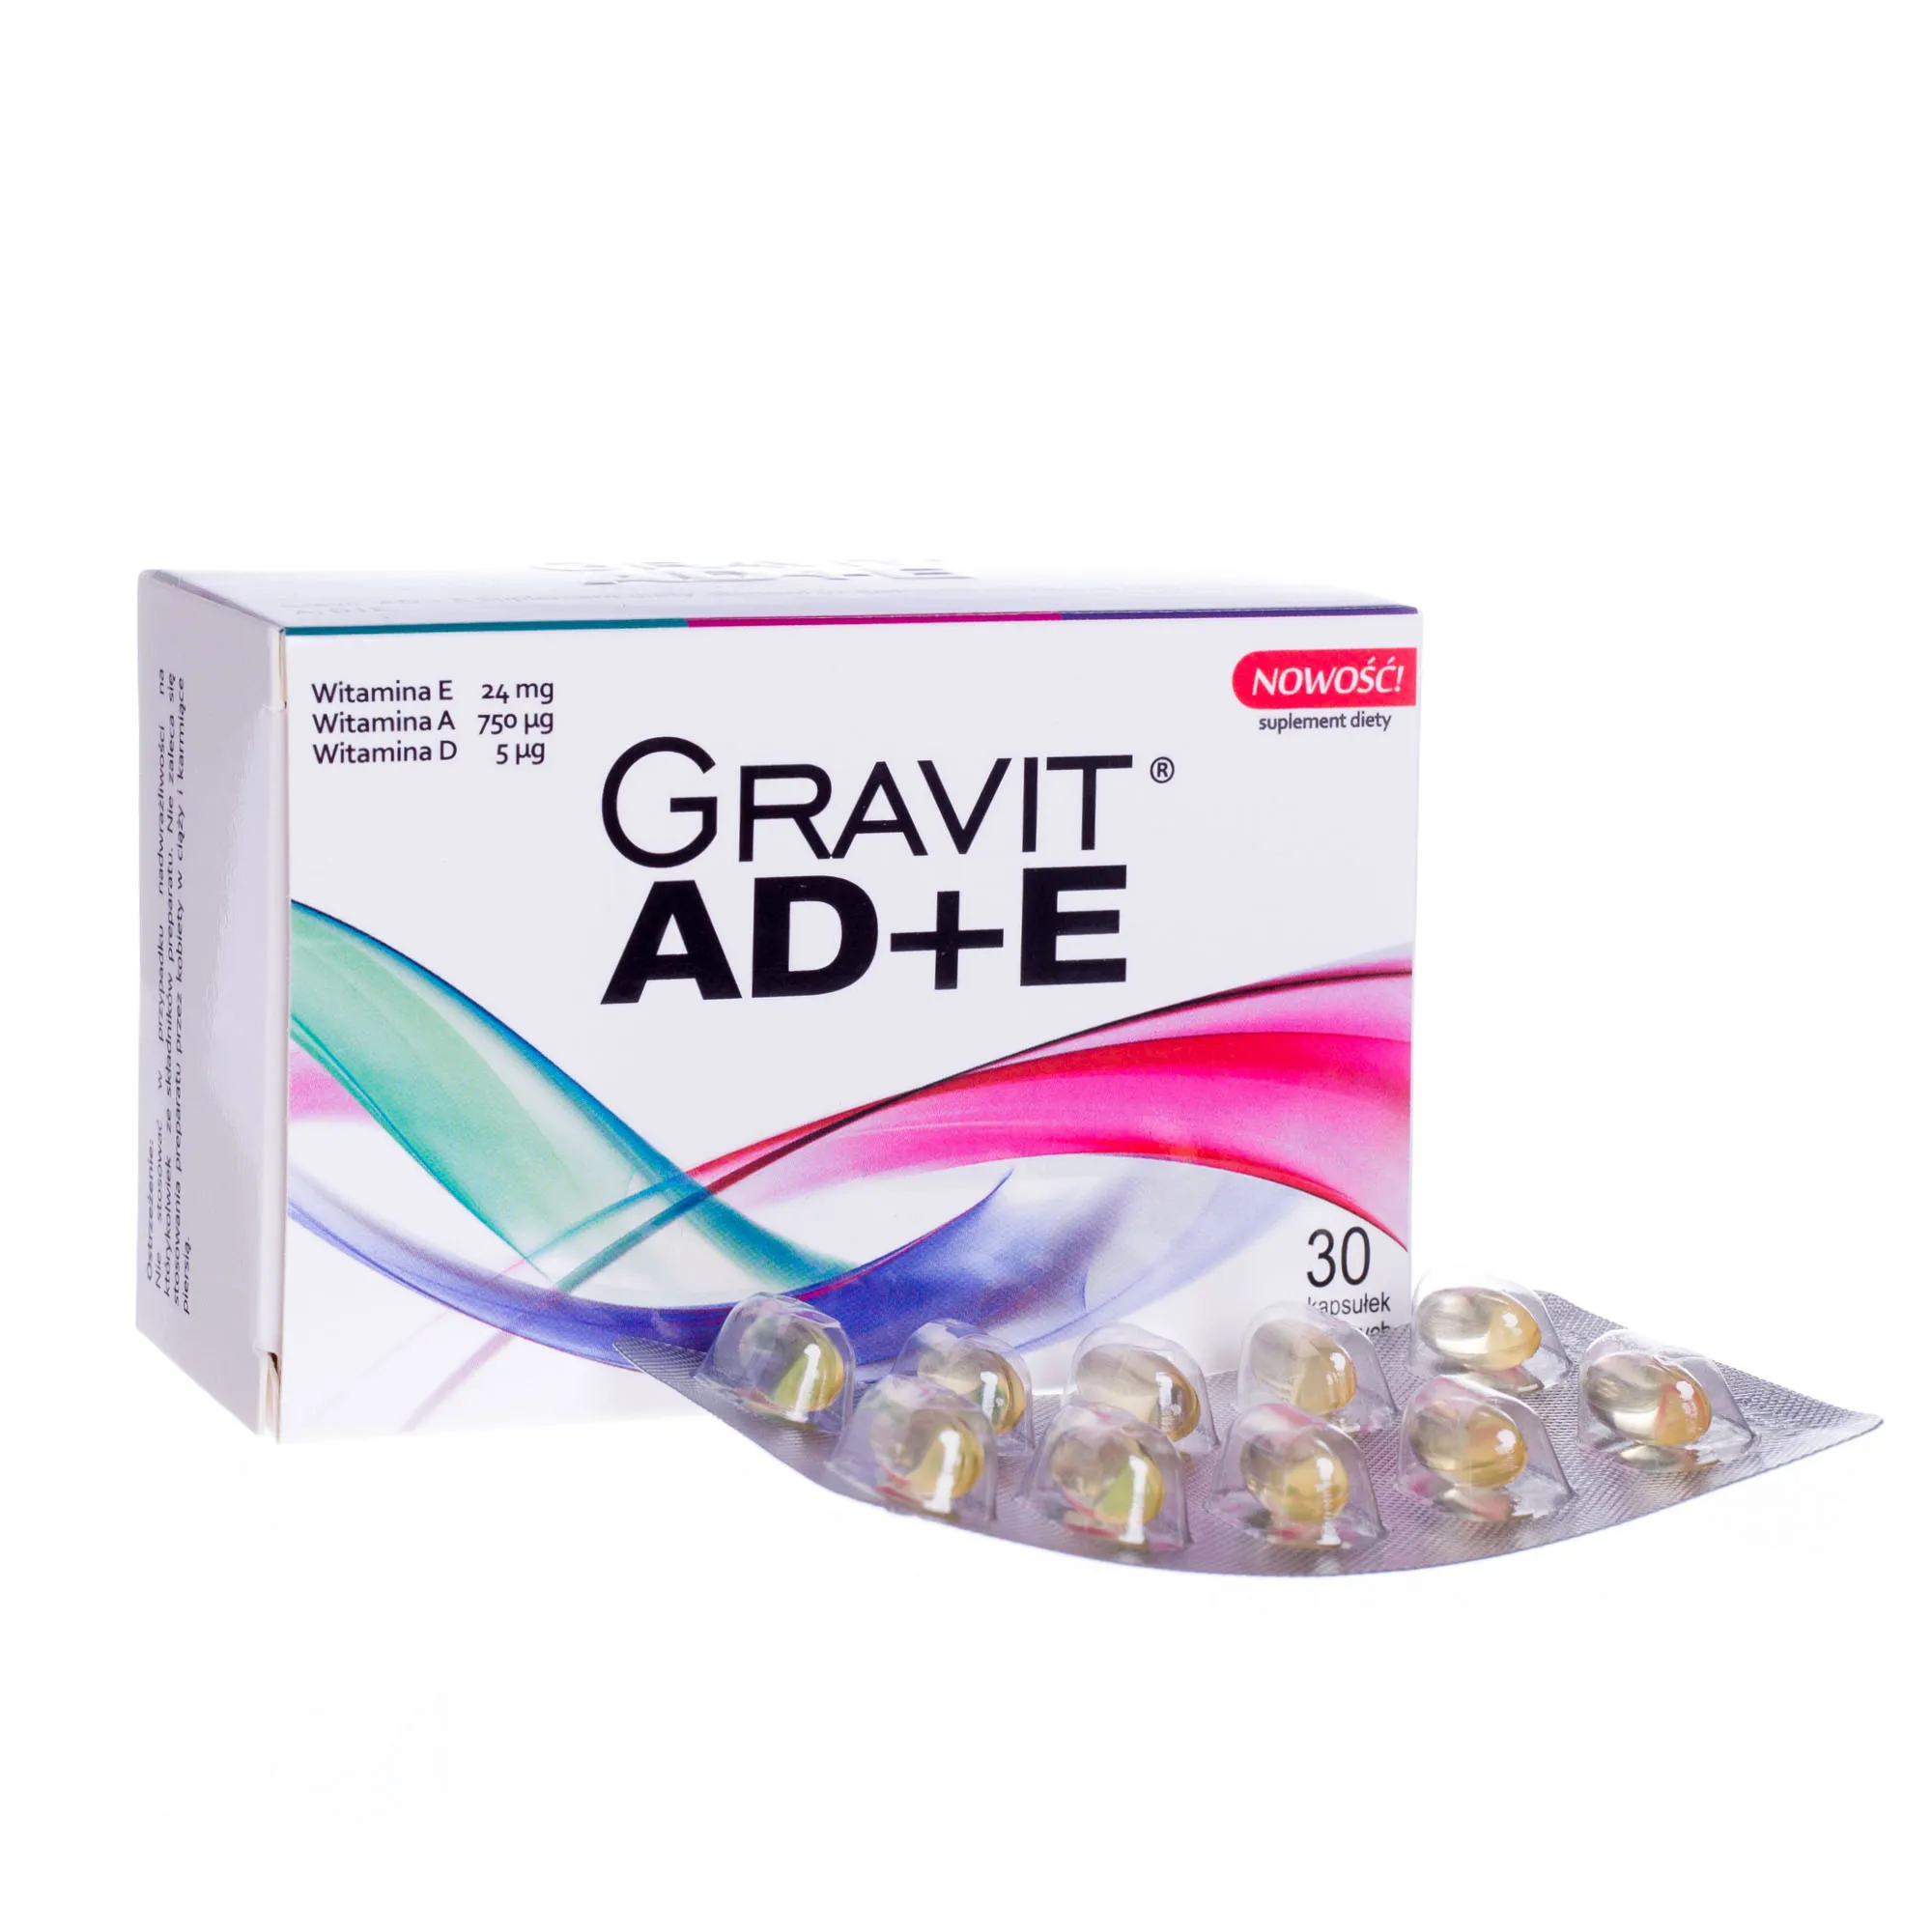 Gravit AD+E, suplement diety, 30 kapsułek żelowych 